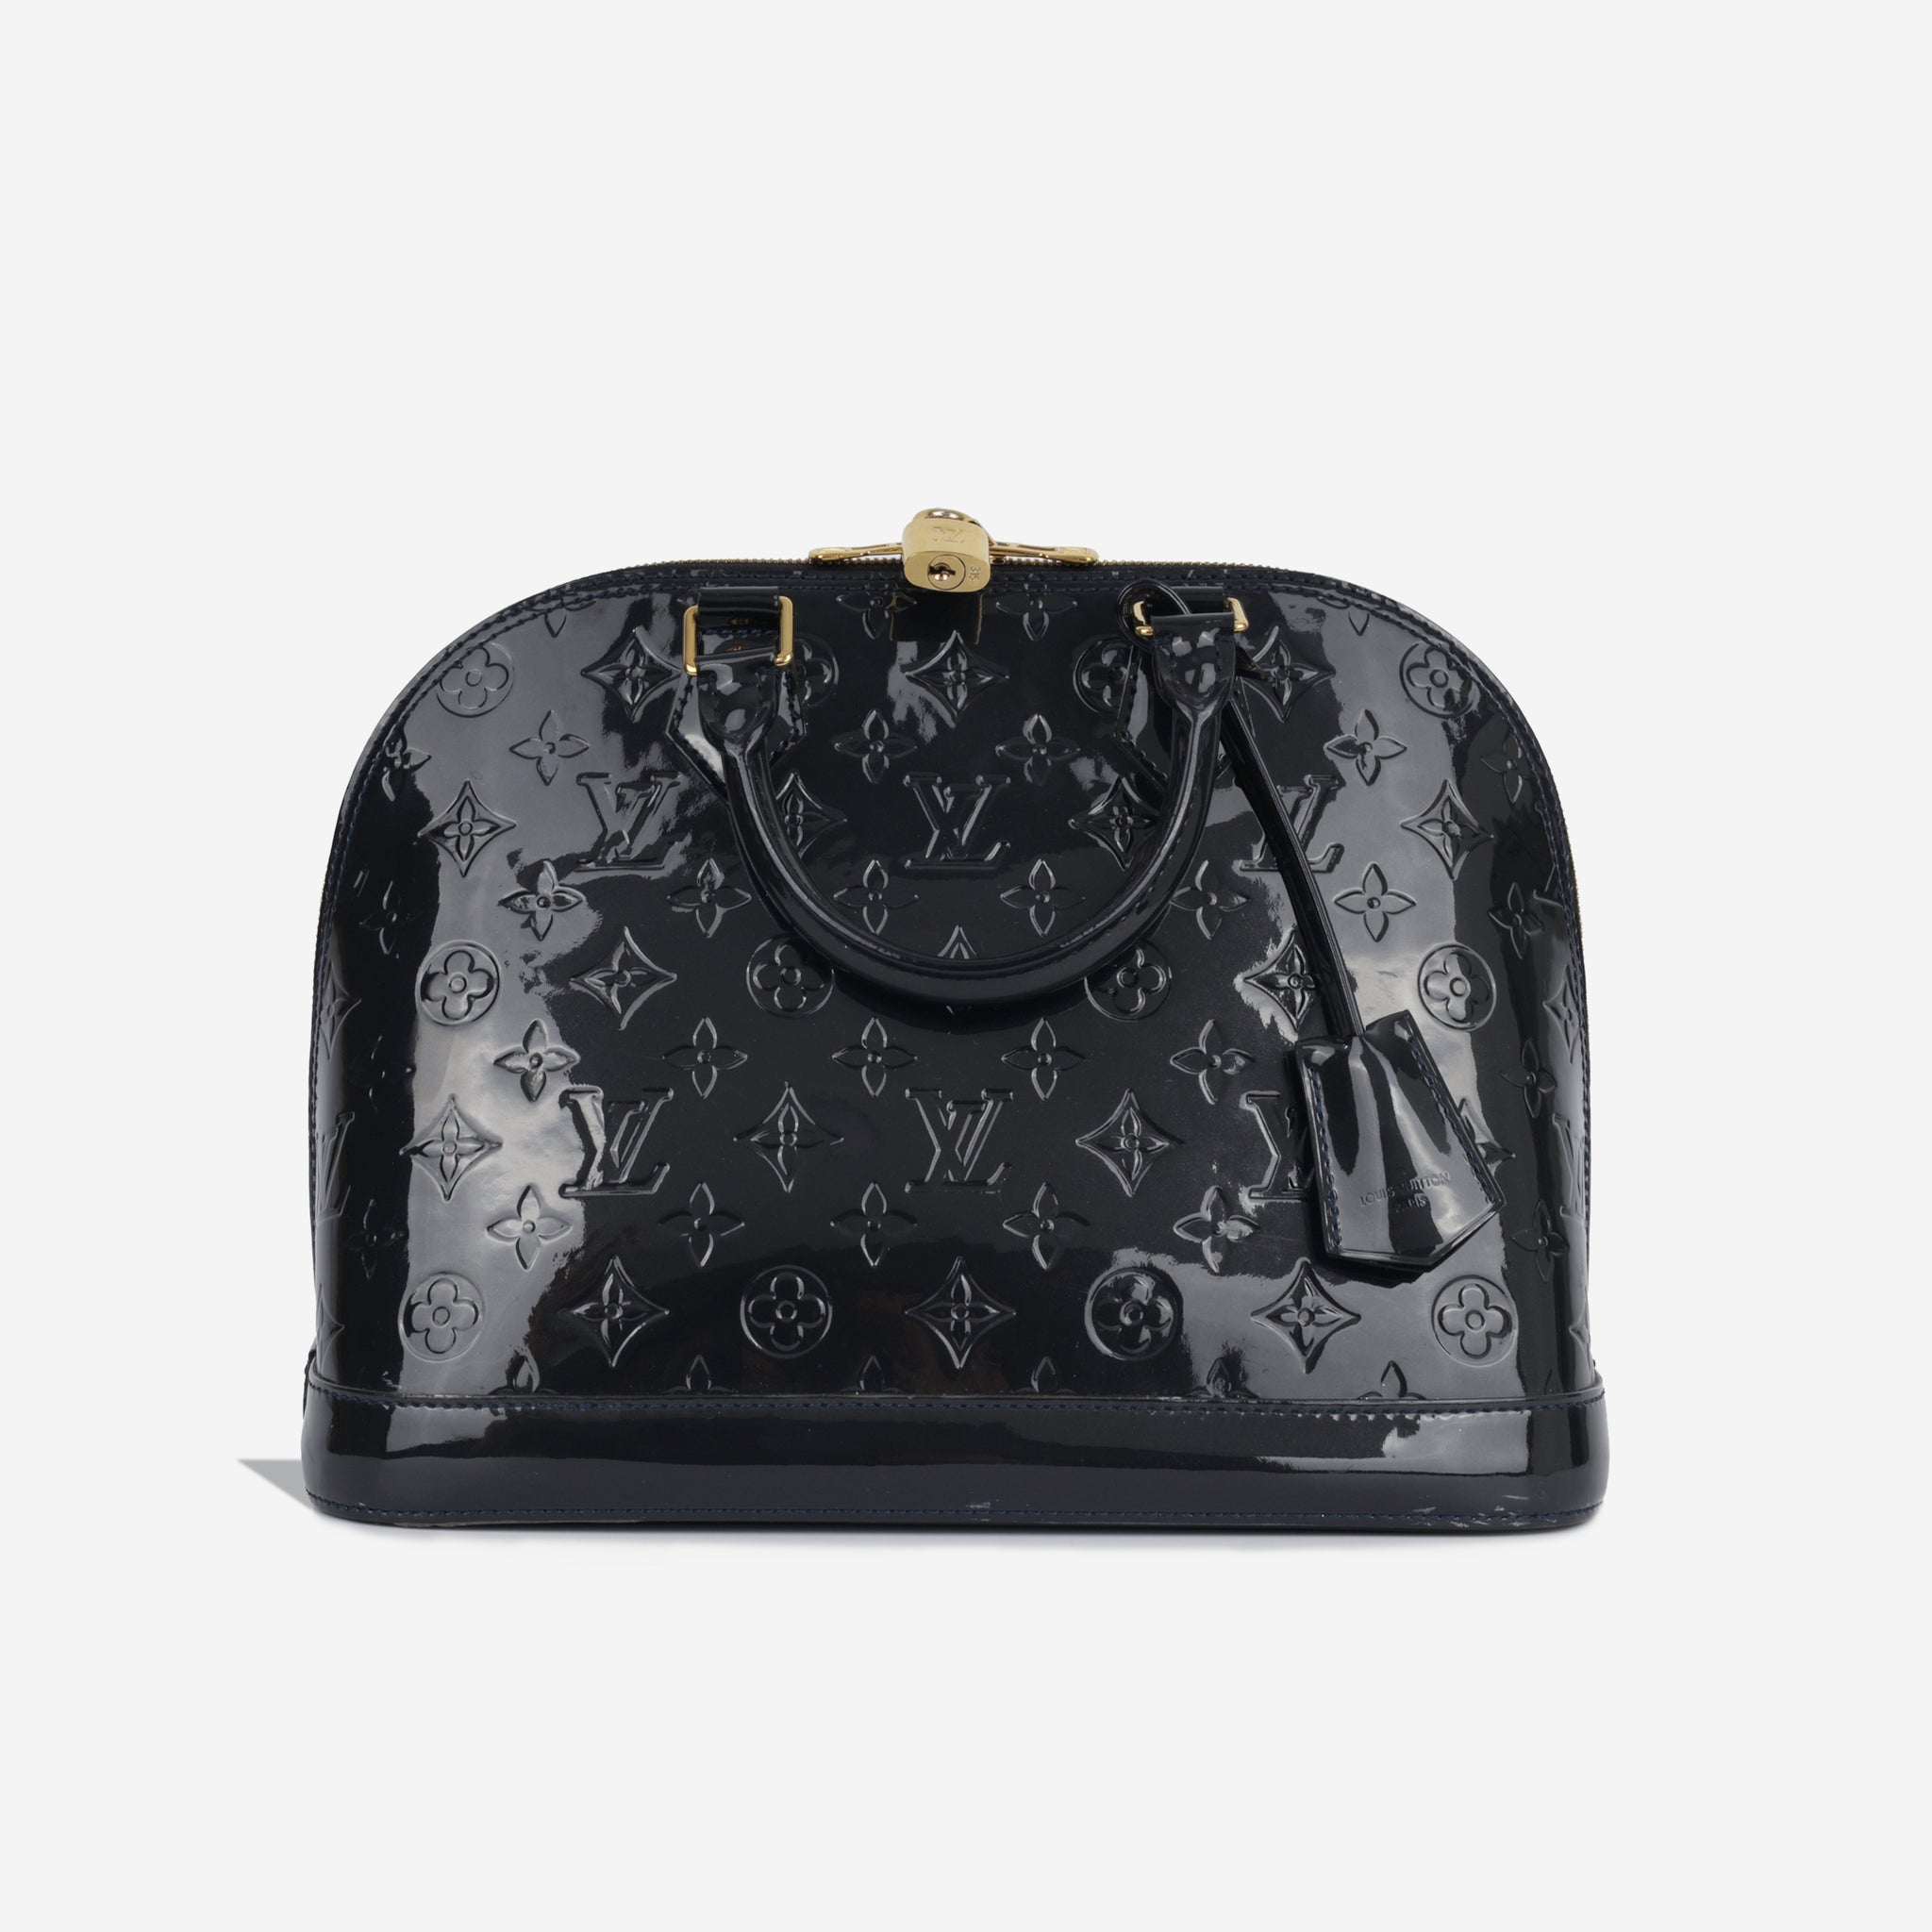 Louis Vuitton - Alma PM - Monogram Vernis - Black - Pre-Loved